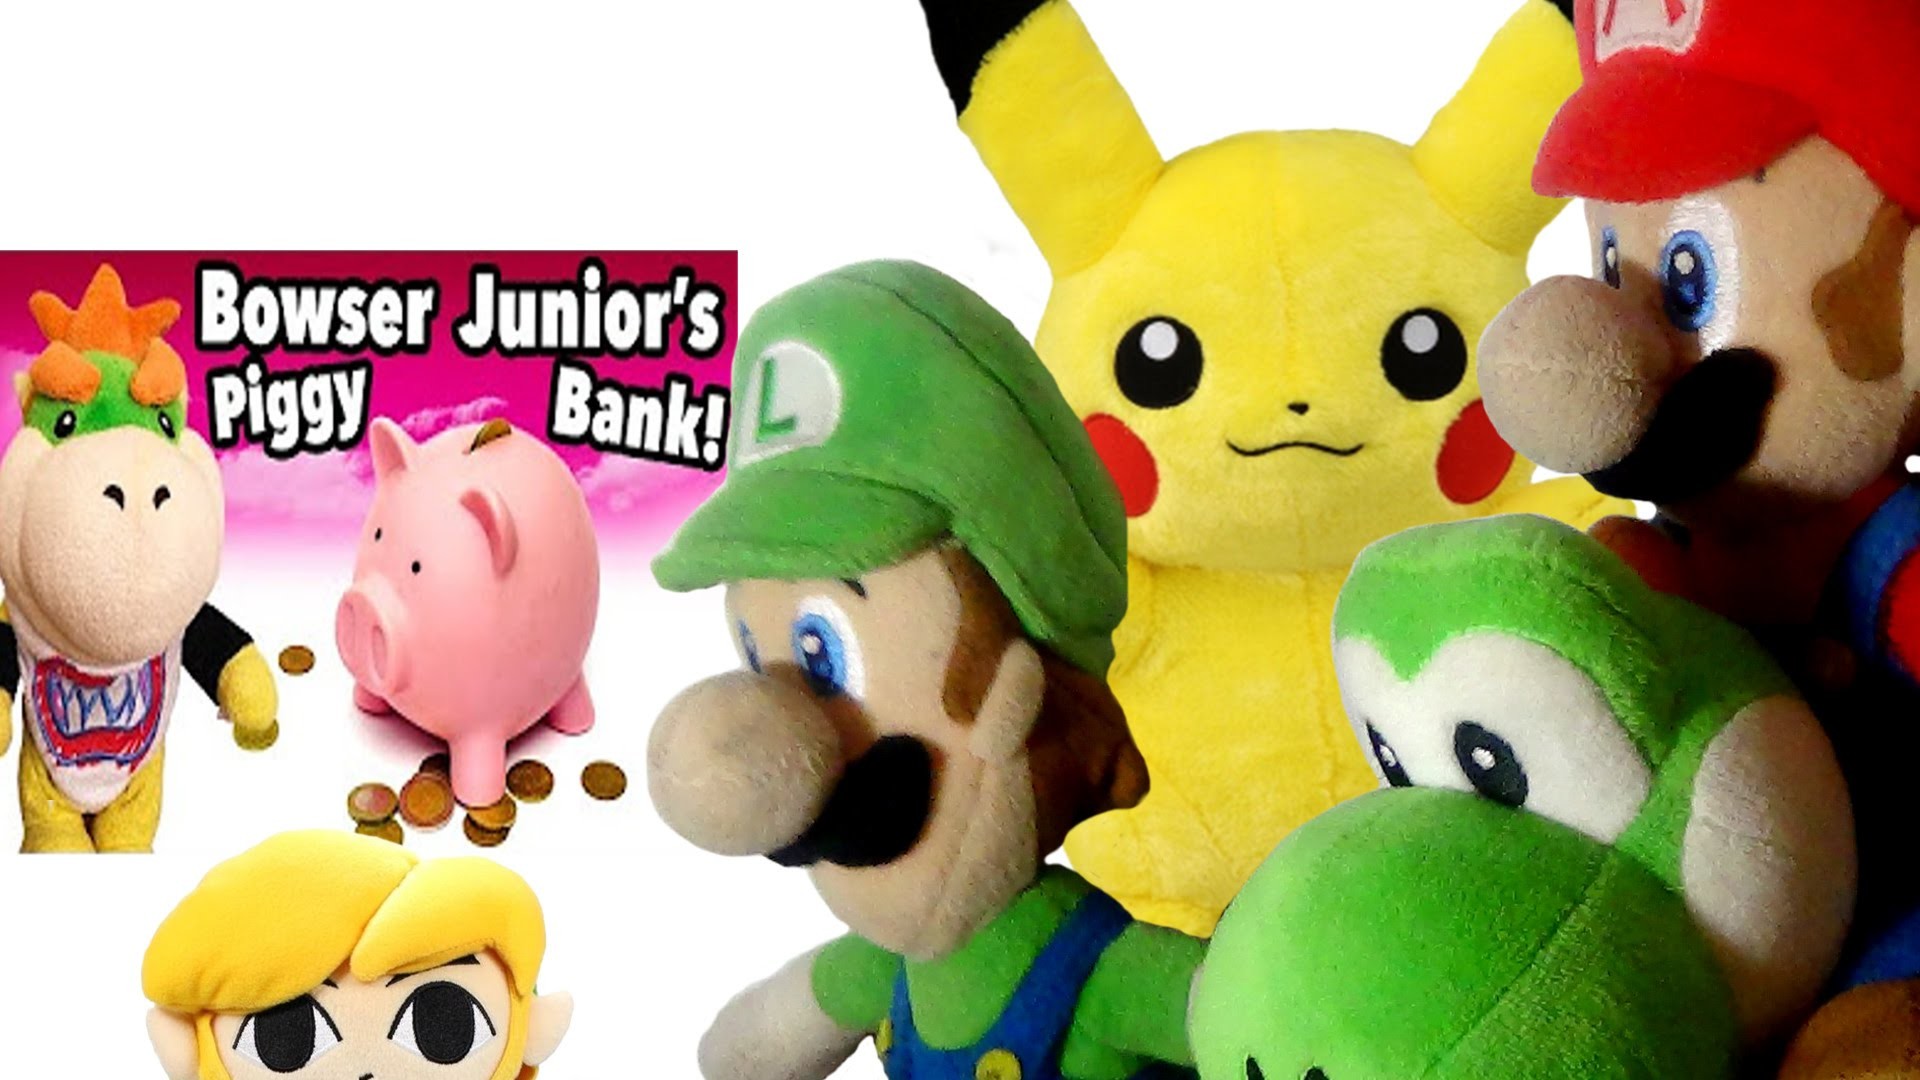 1920x1080 SML Movie: Bowser Junior's Piggy Bank! Mario And Luigi's Reaction (SG:  Pikachu, Yoshi And Link) - YouTube